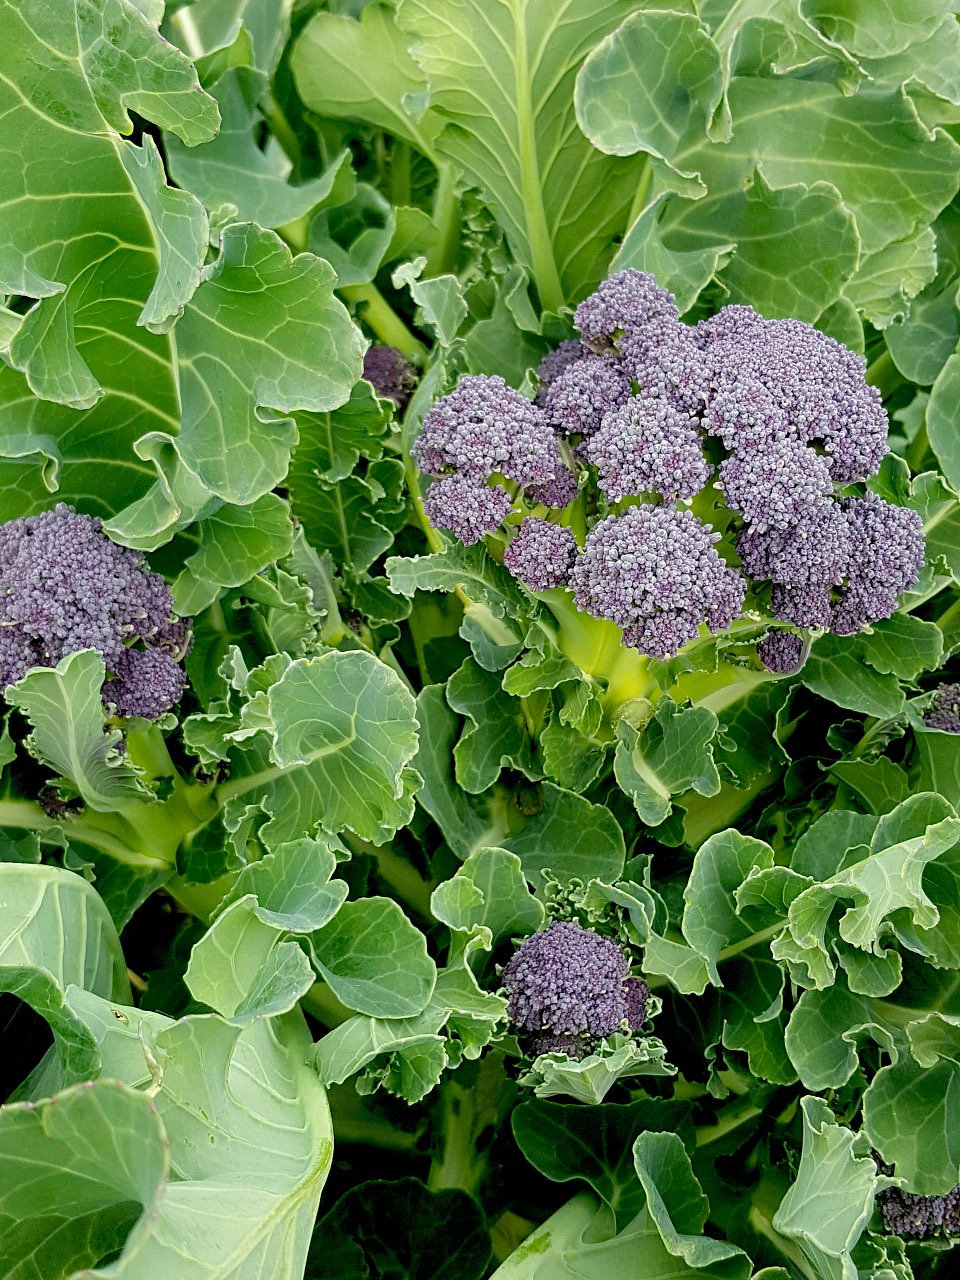 Purple broccoli